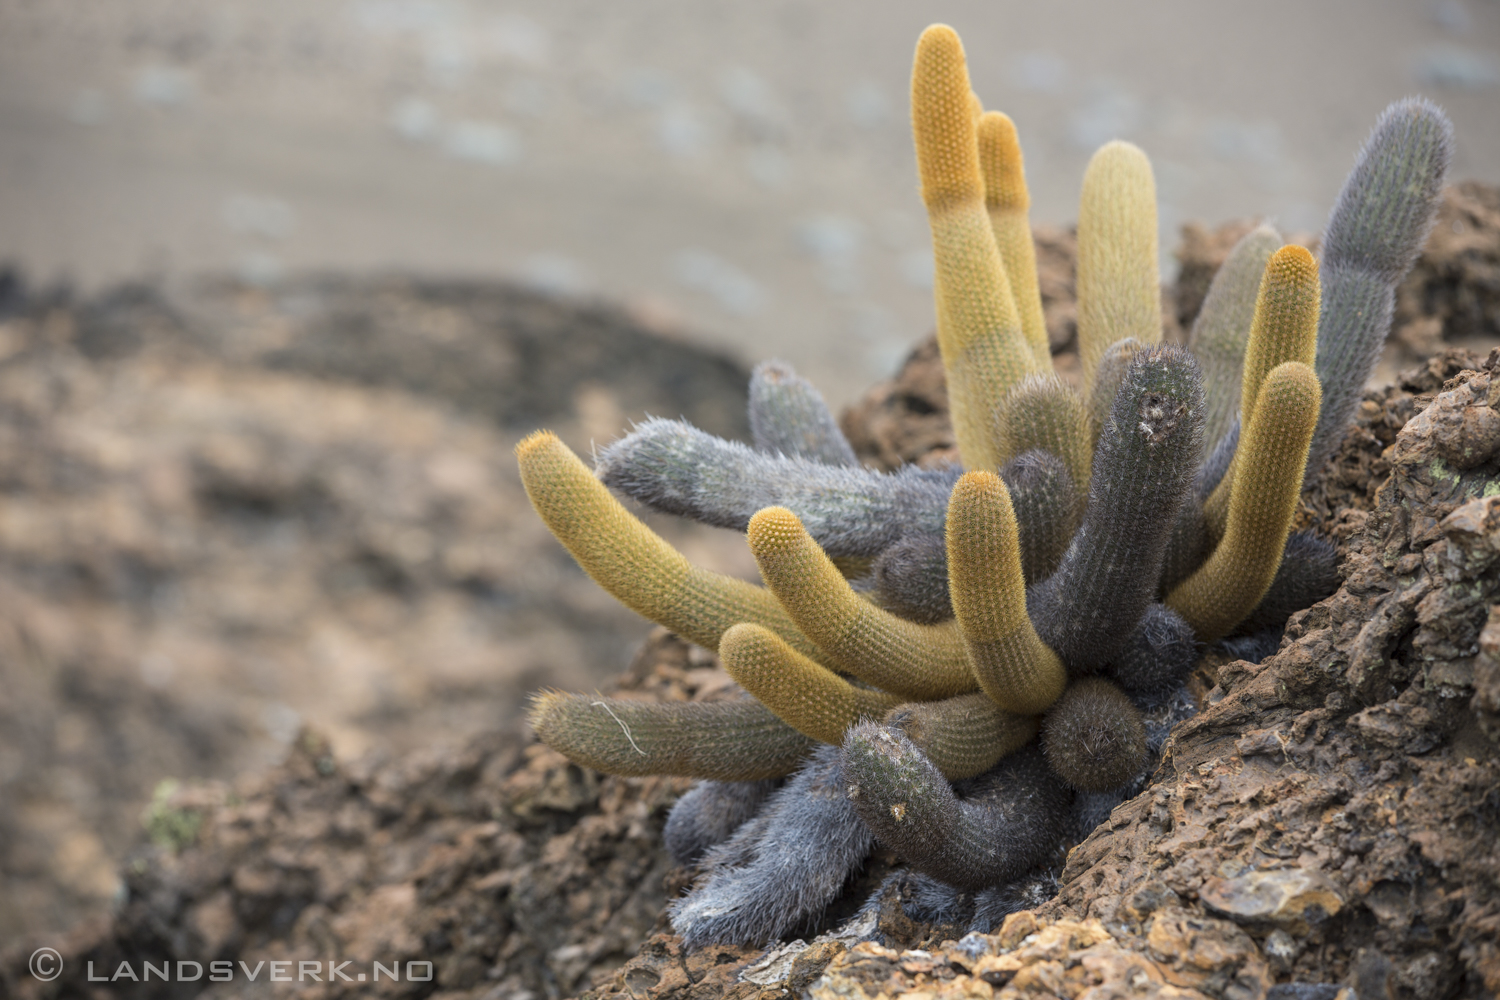 Spider Cactus, Bartolome Island, Galapagos. 

(Canon EOS 5D Mark III / Canon EF 70-200mm f/2.8 L IS II USM)